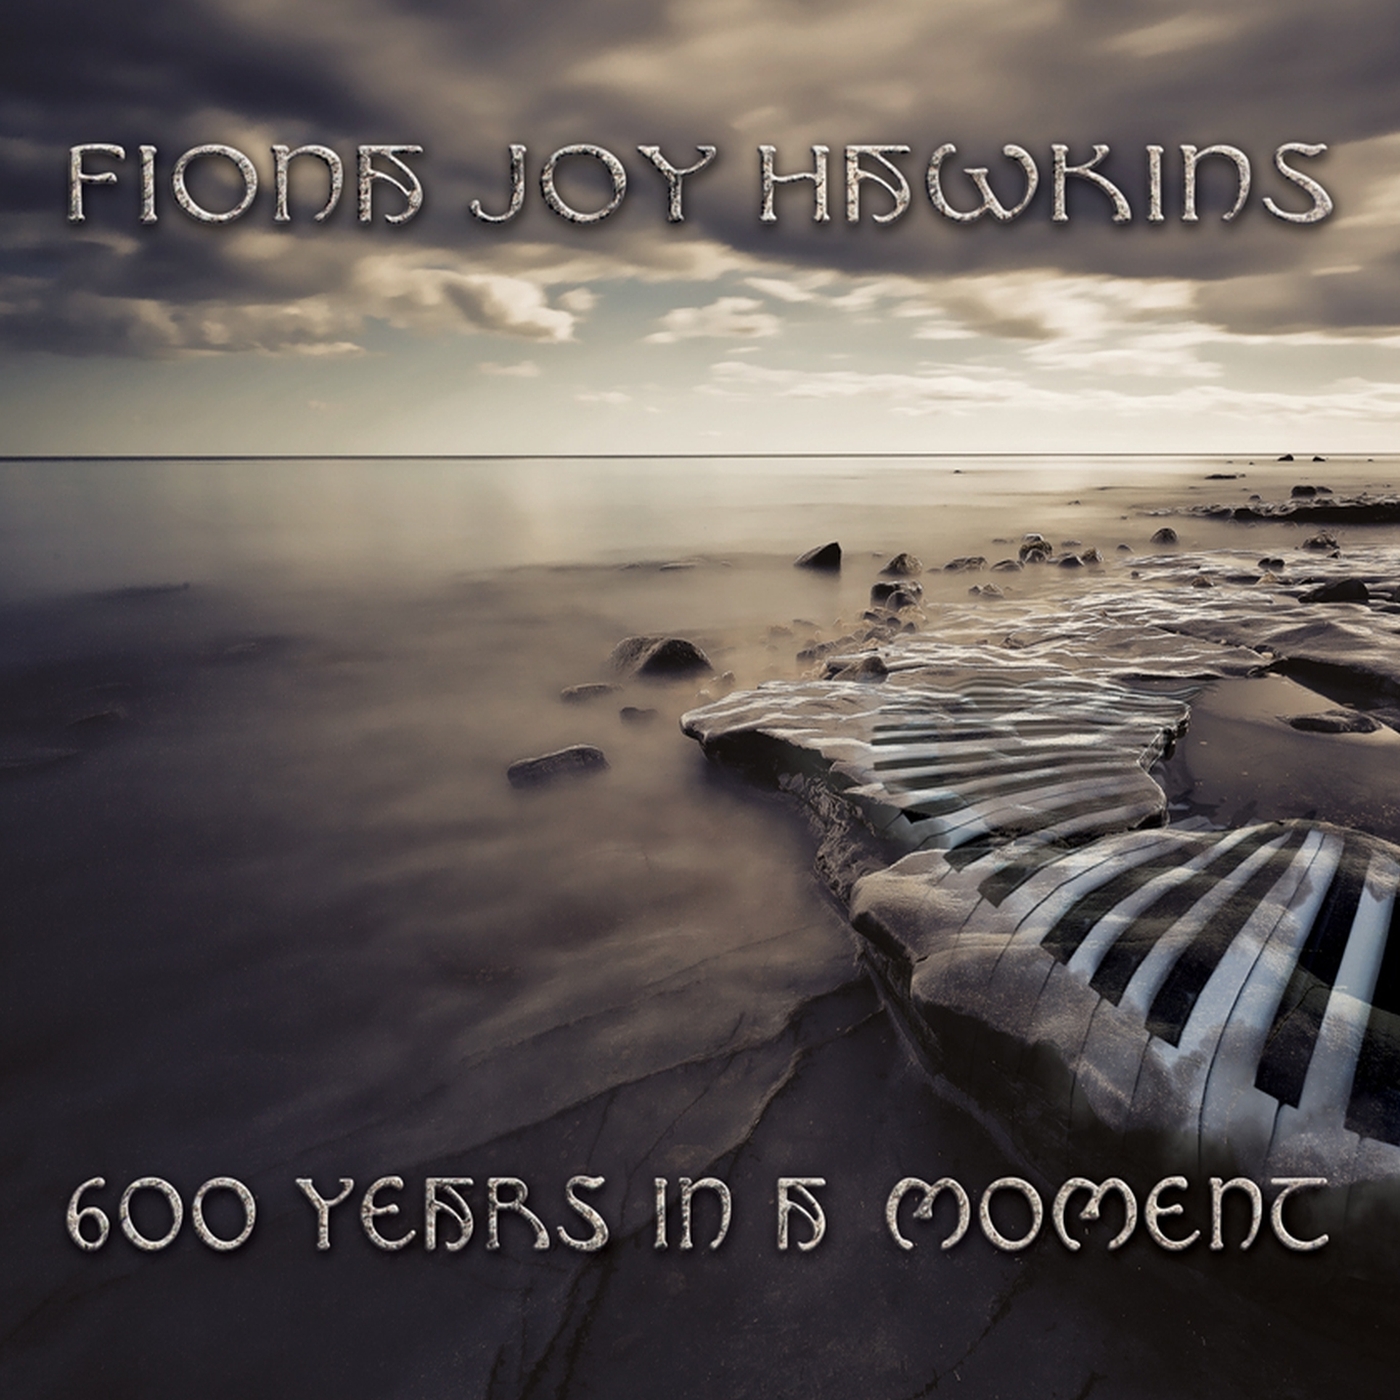 Fiona Joy Hawkins' album: 600 Years in a Moment